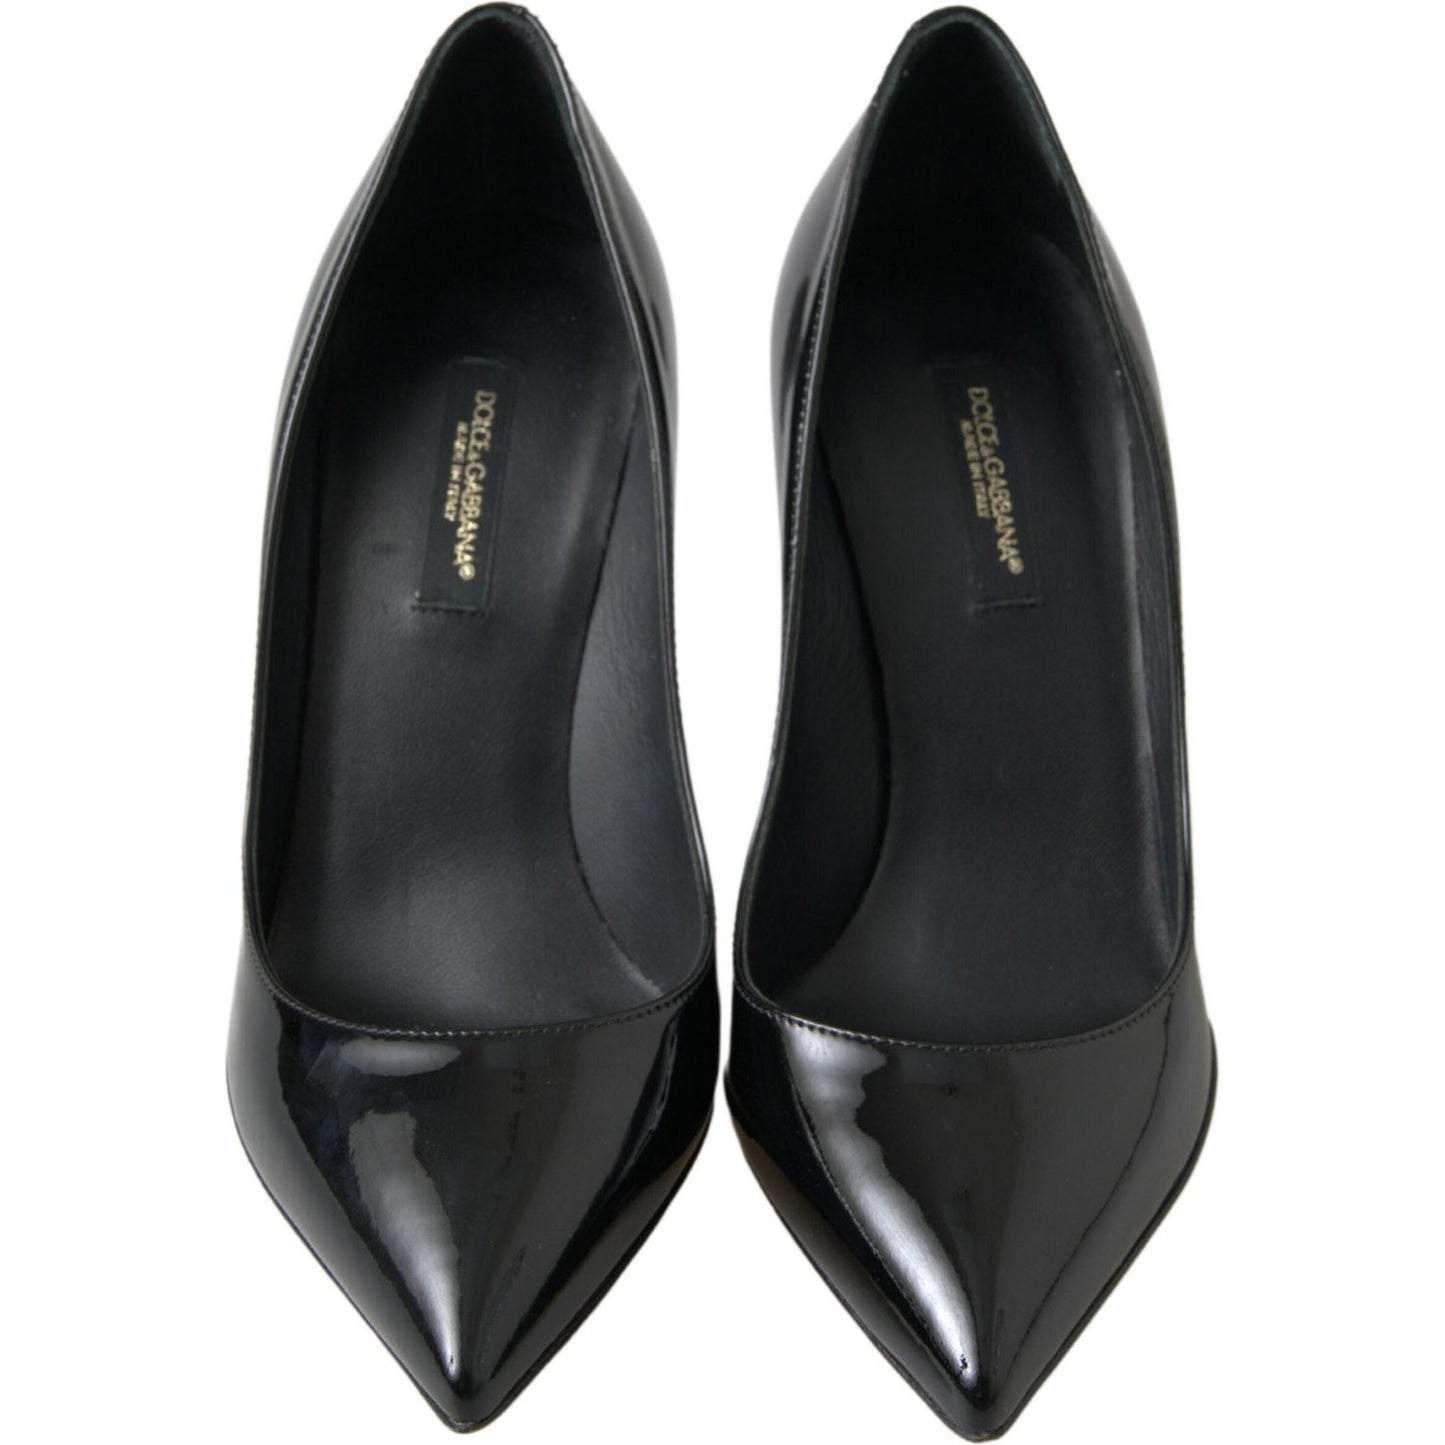 Dolce & Gabbana Elegant Patent Leather Heels Pumps black-patent-leather-high-heels-pumps-shoes